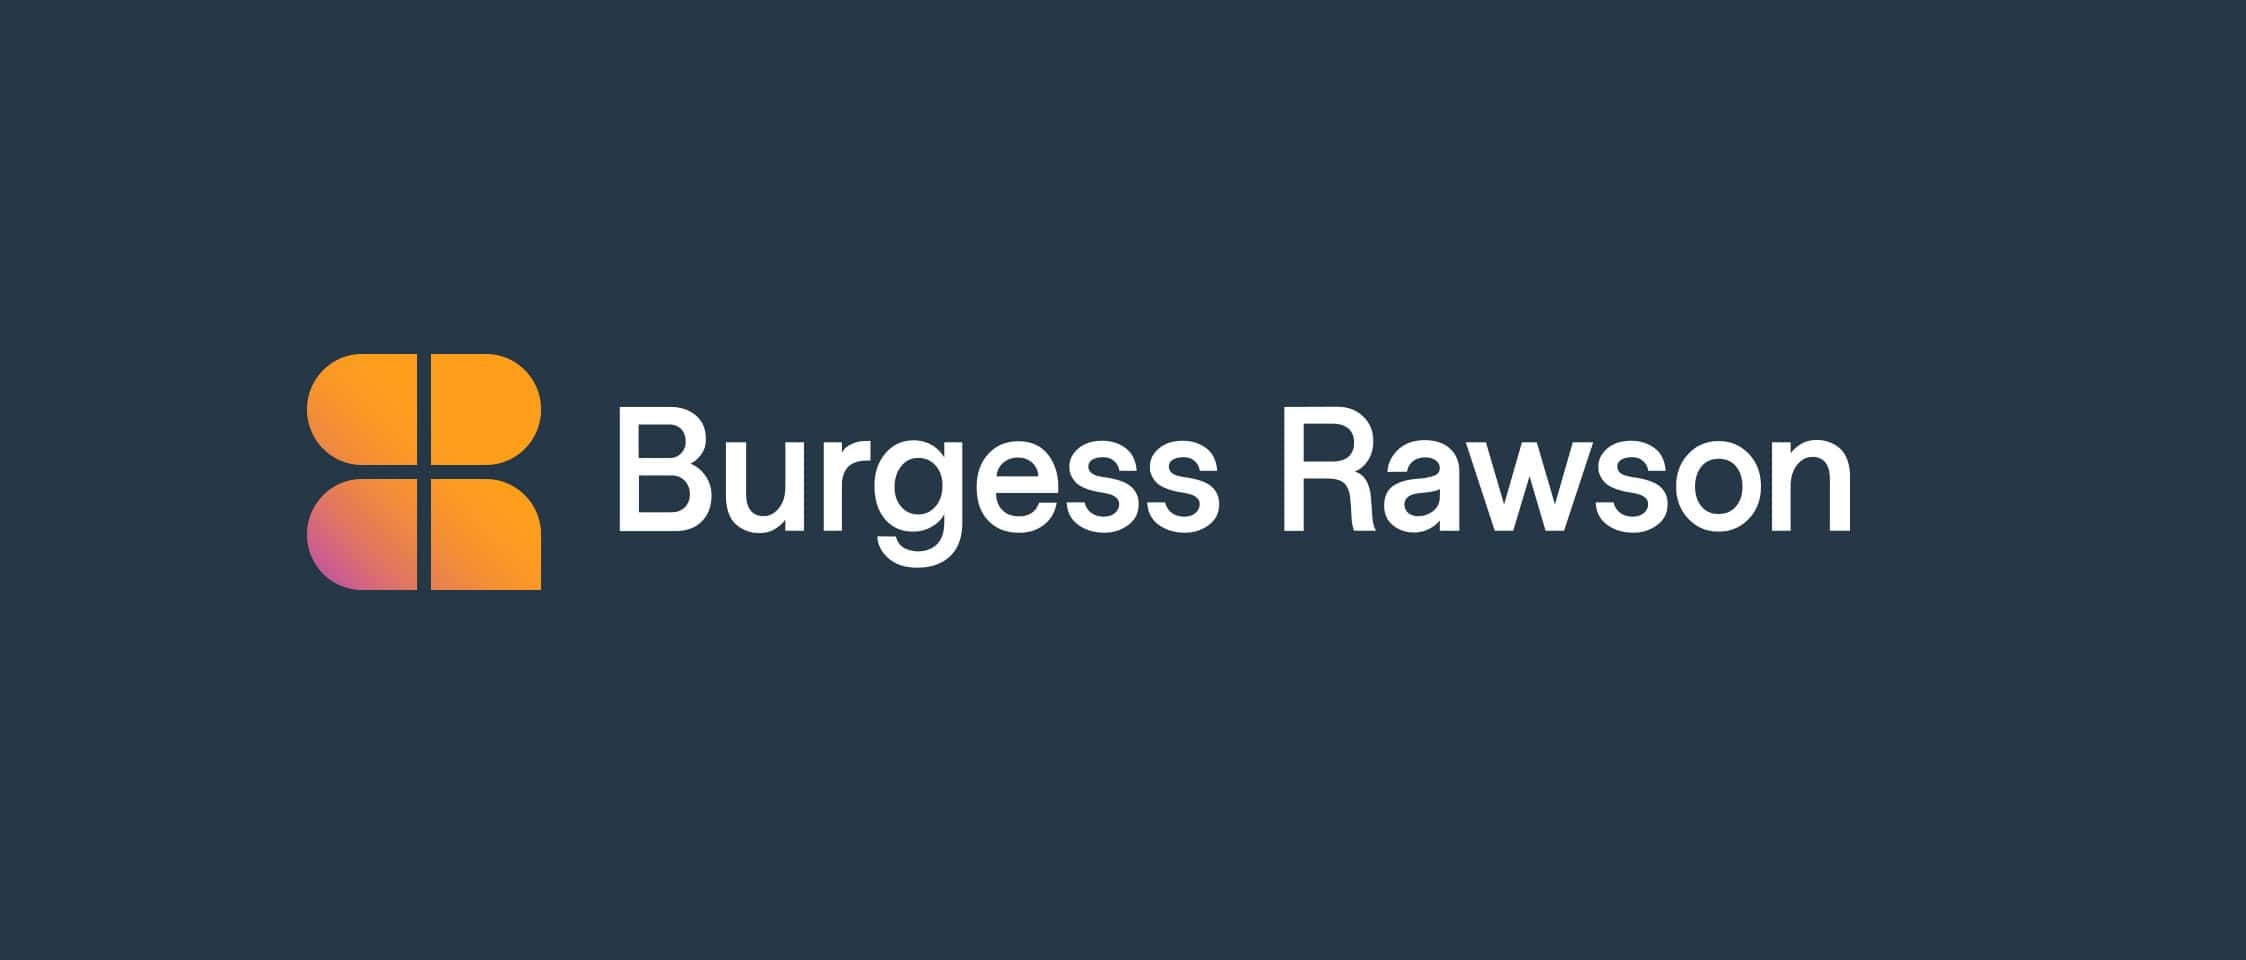 Burgess Rawson announces key senior appointments